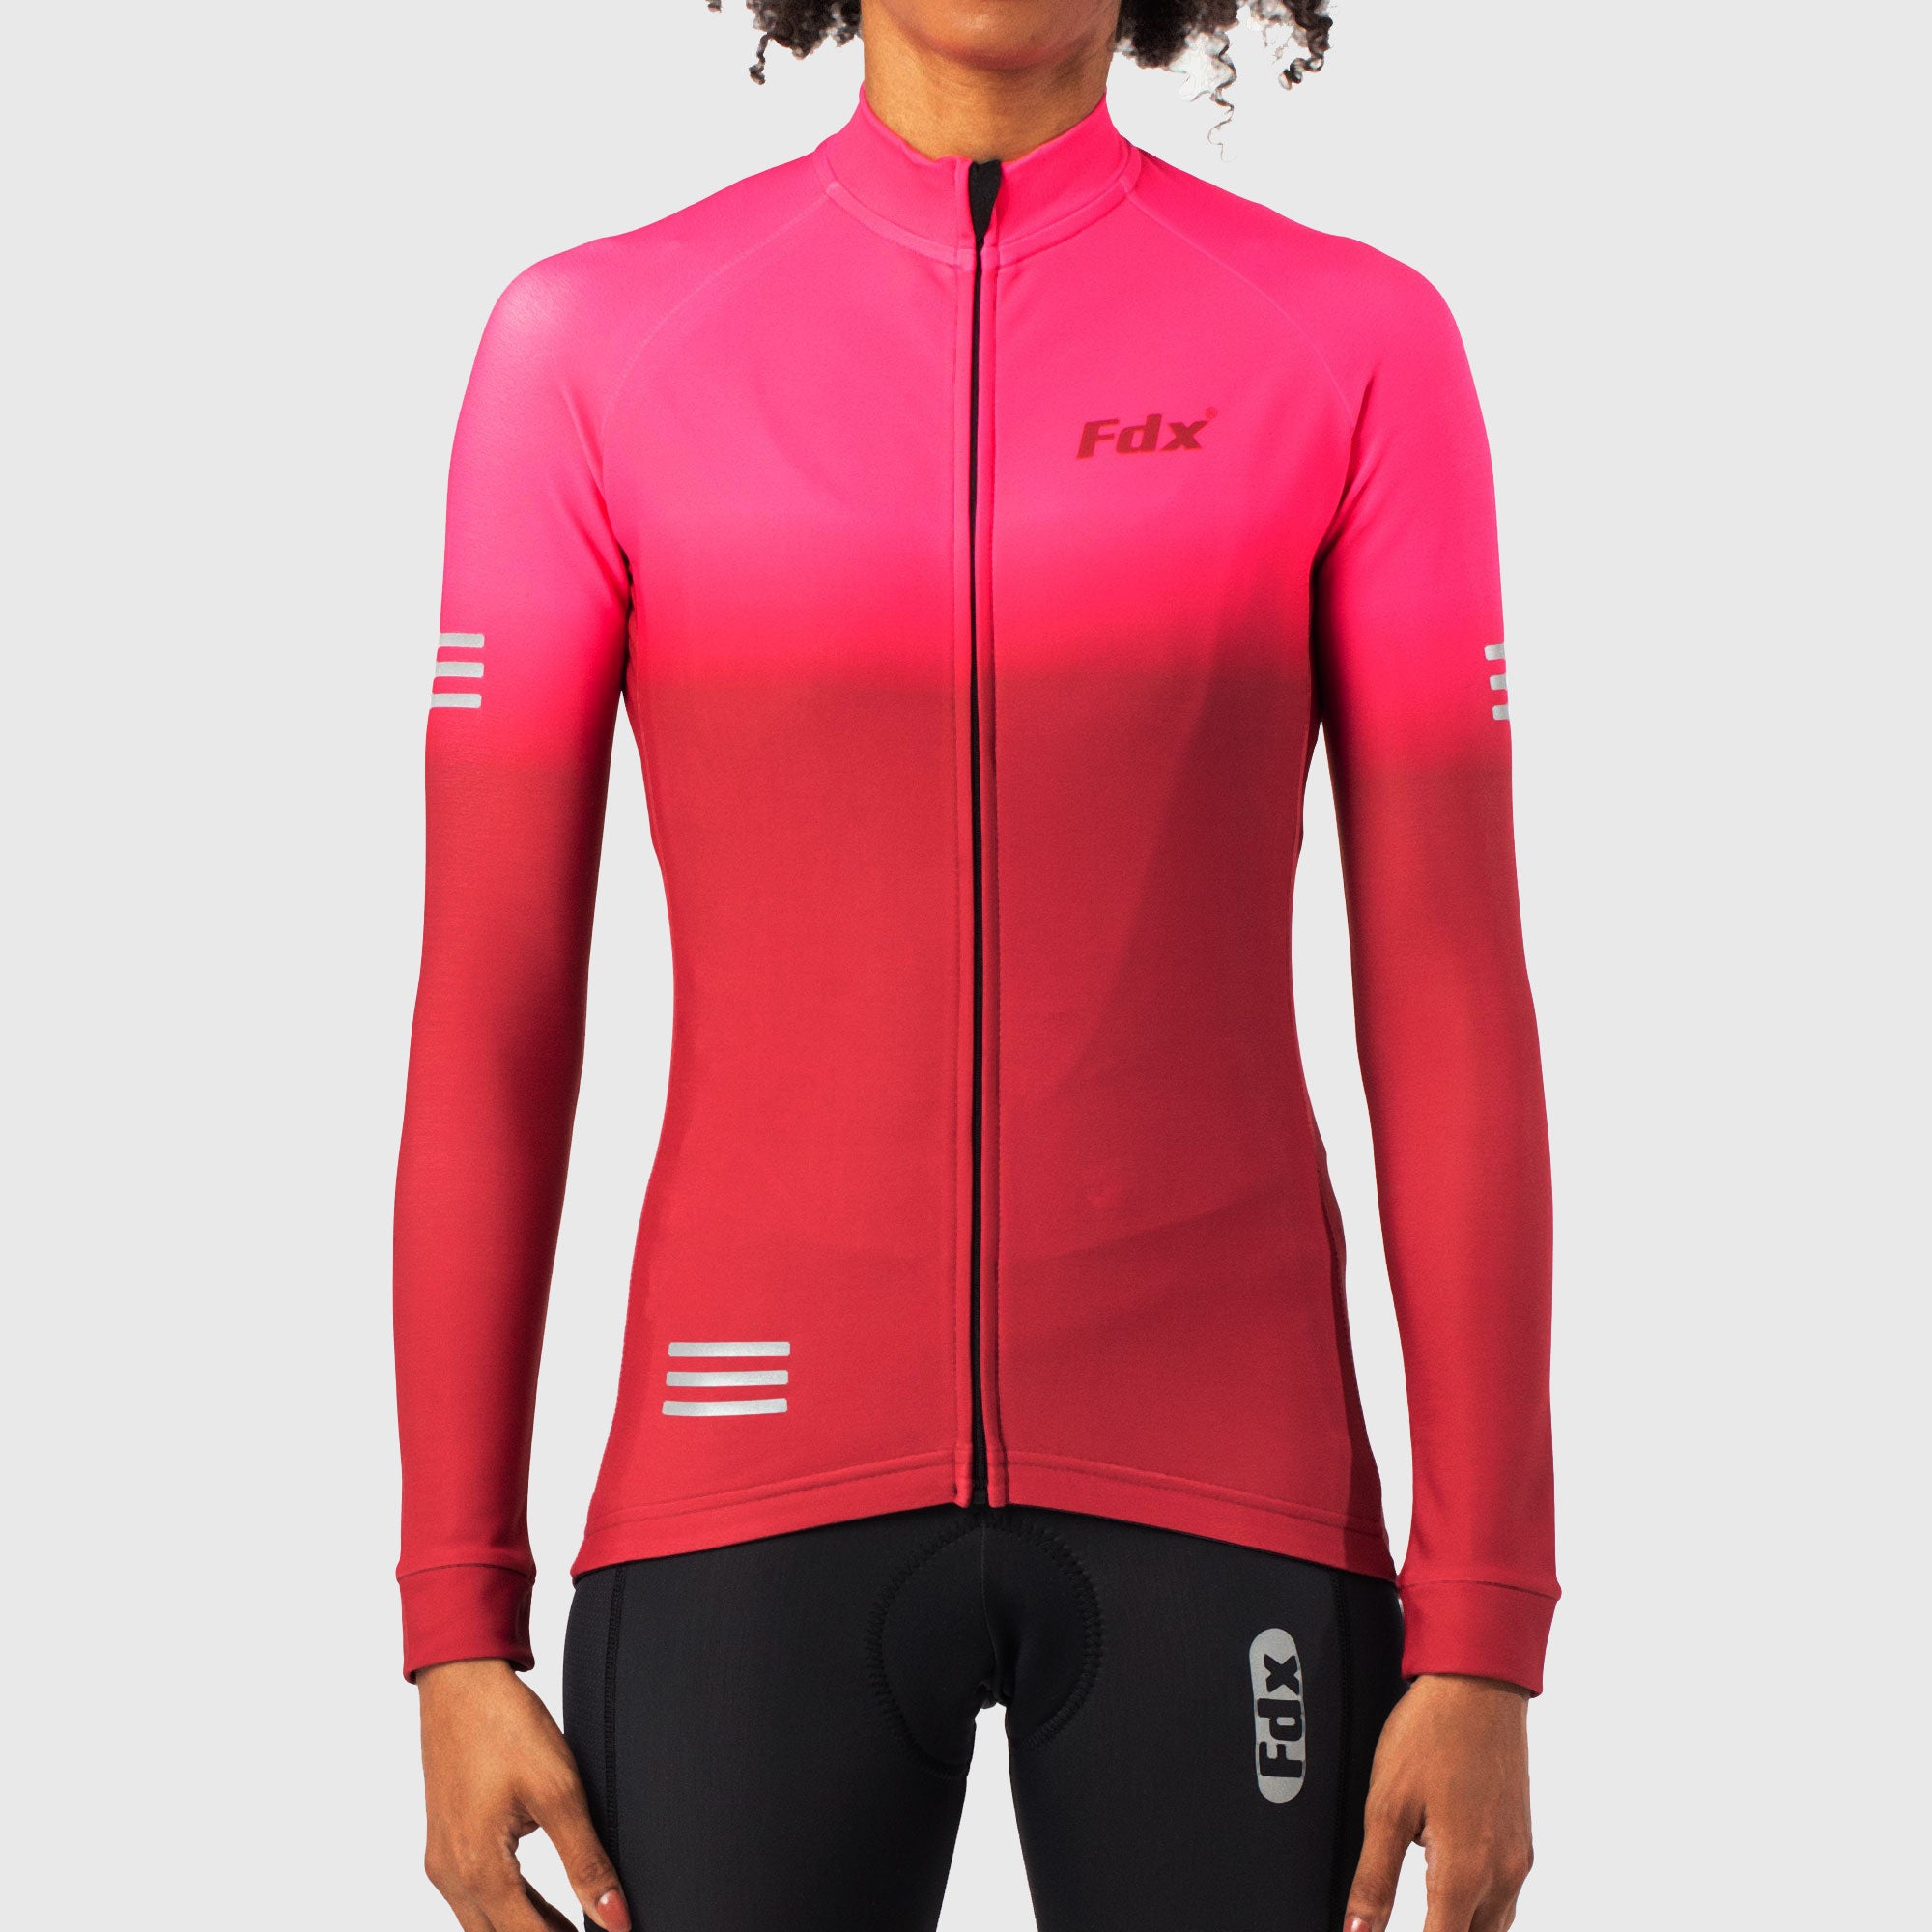 Fdx Duo Women's Pink / Maroon Long Sleeve Winter Cycling Jersey